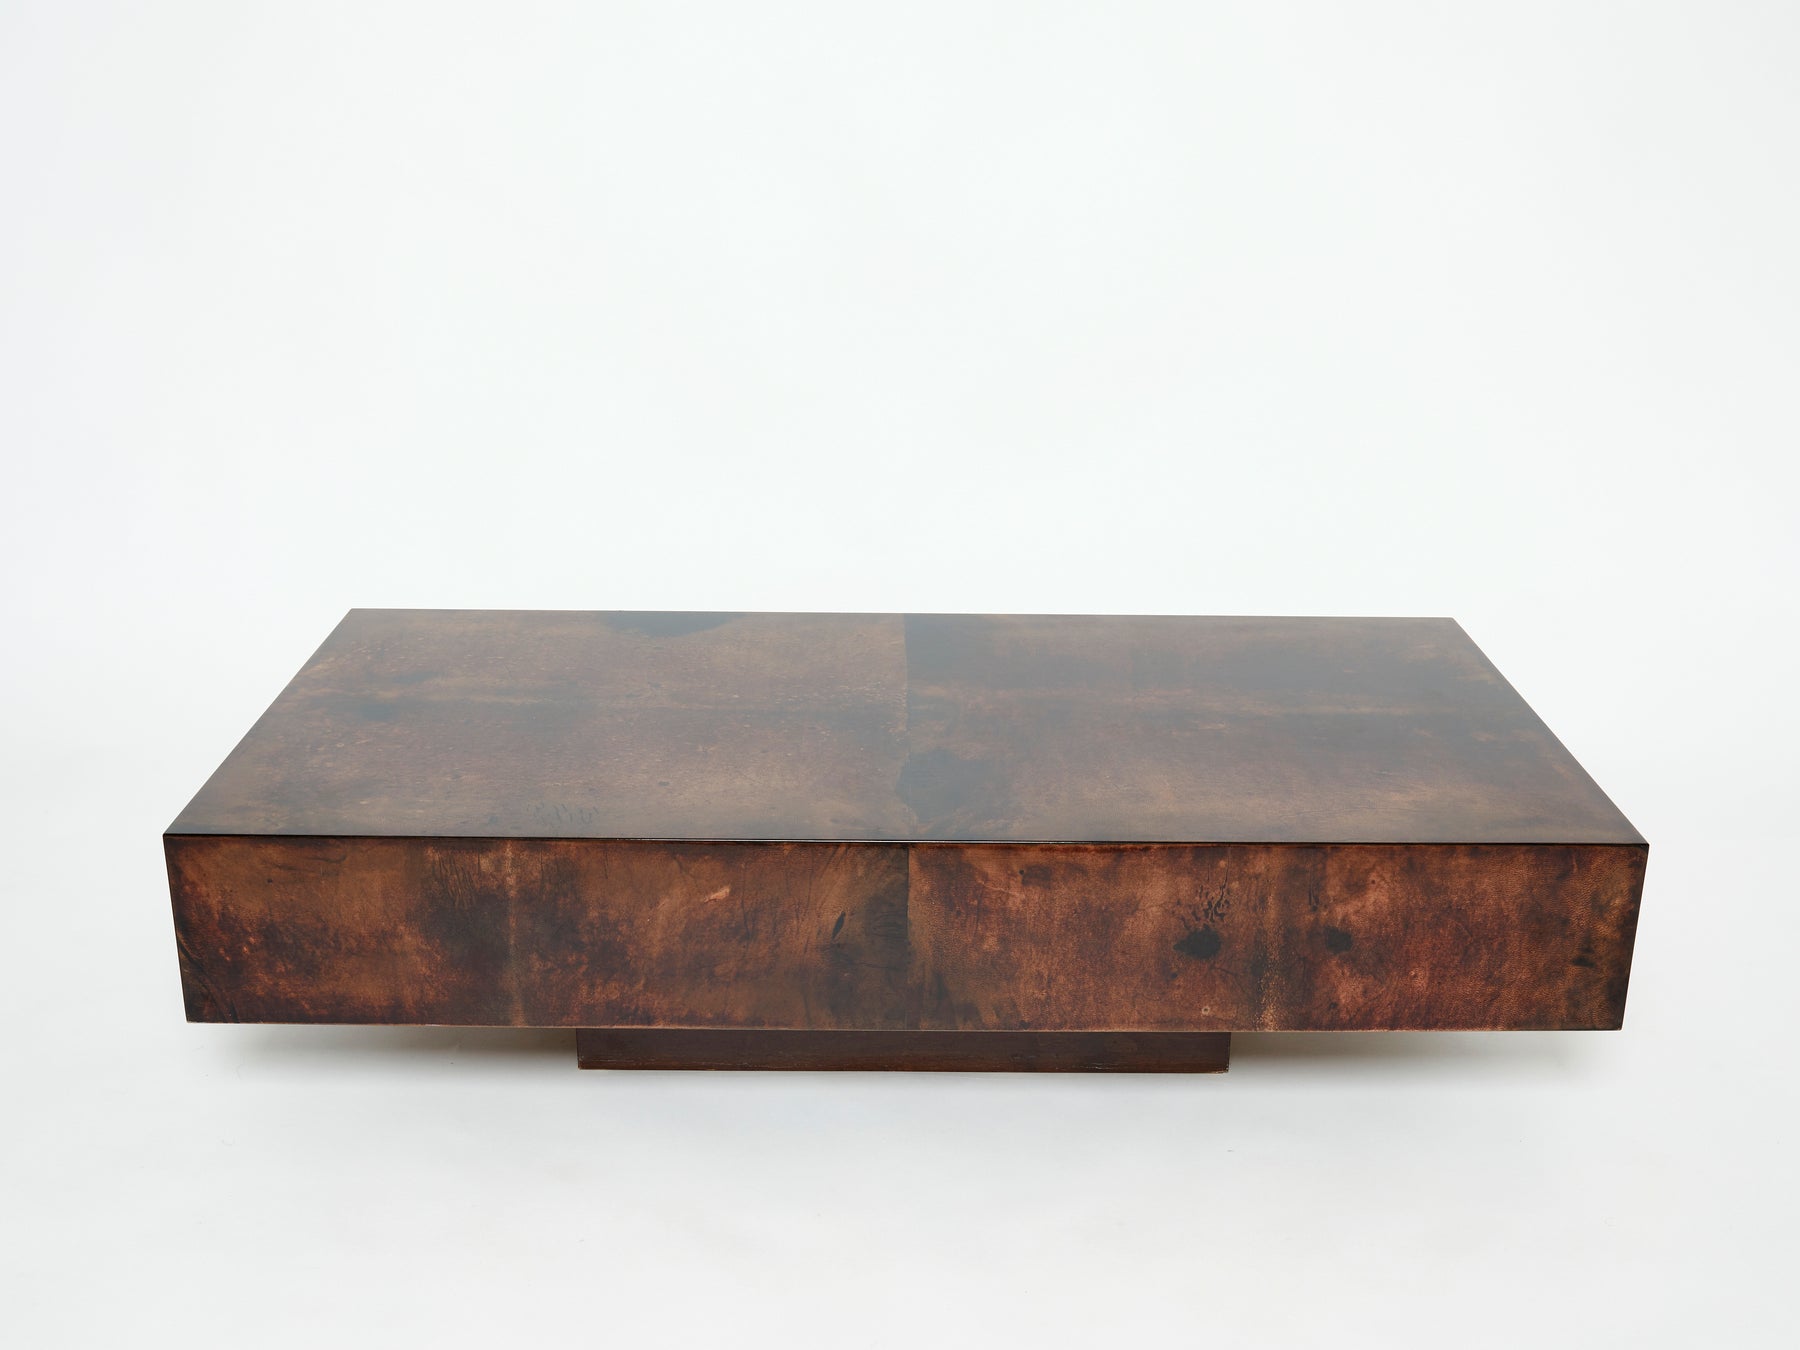 Rare goatskin parchment coffee table by Aldo Tura 1960s